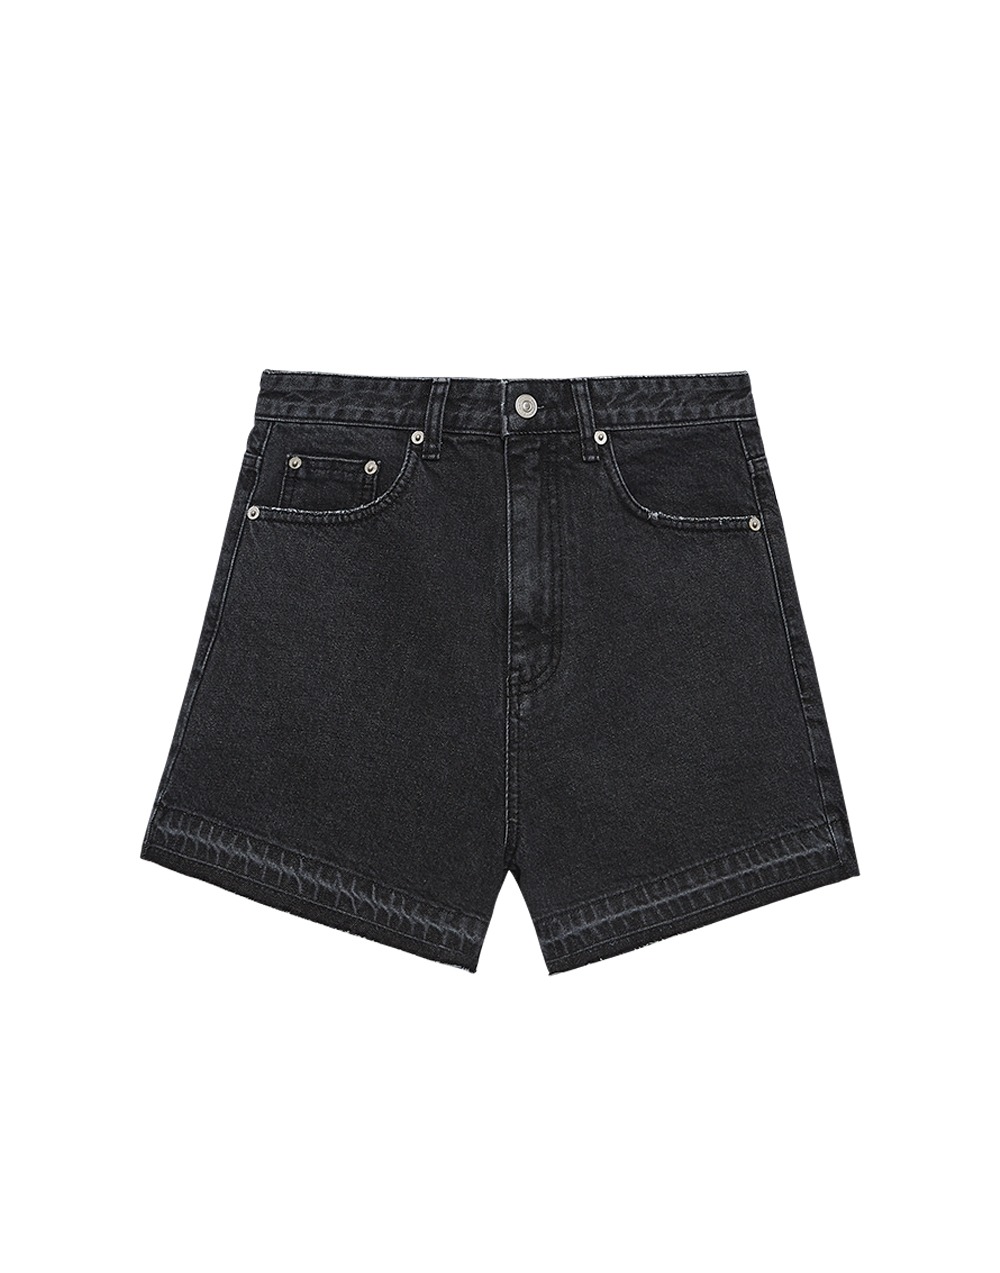 Shorts 04 - Black